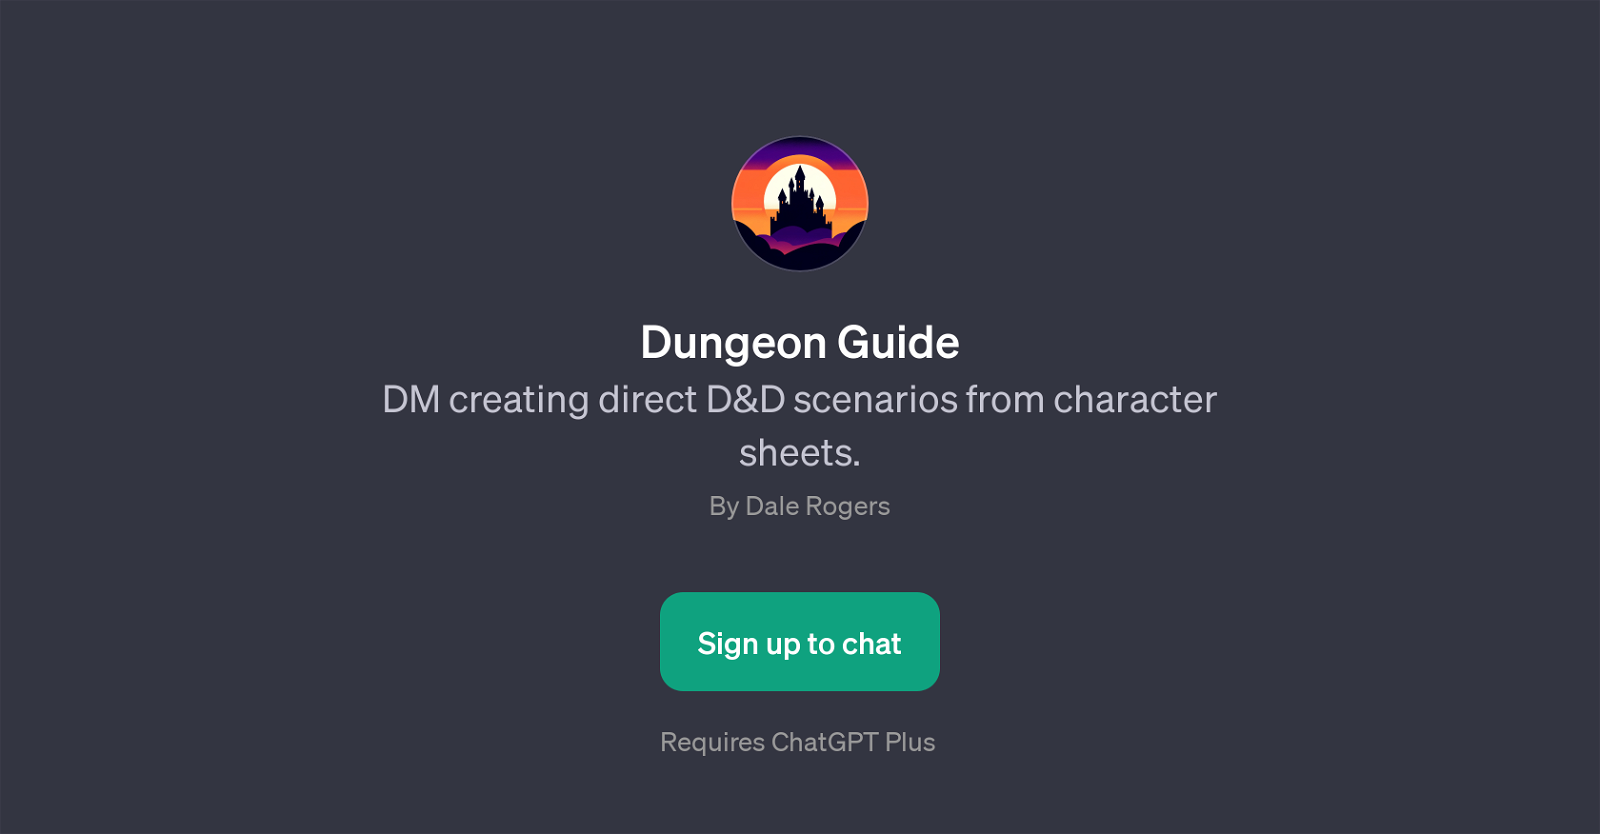 Dungeon Guide website